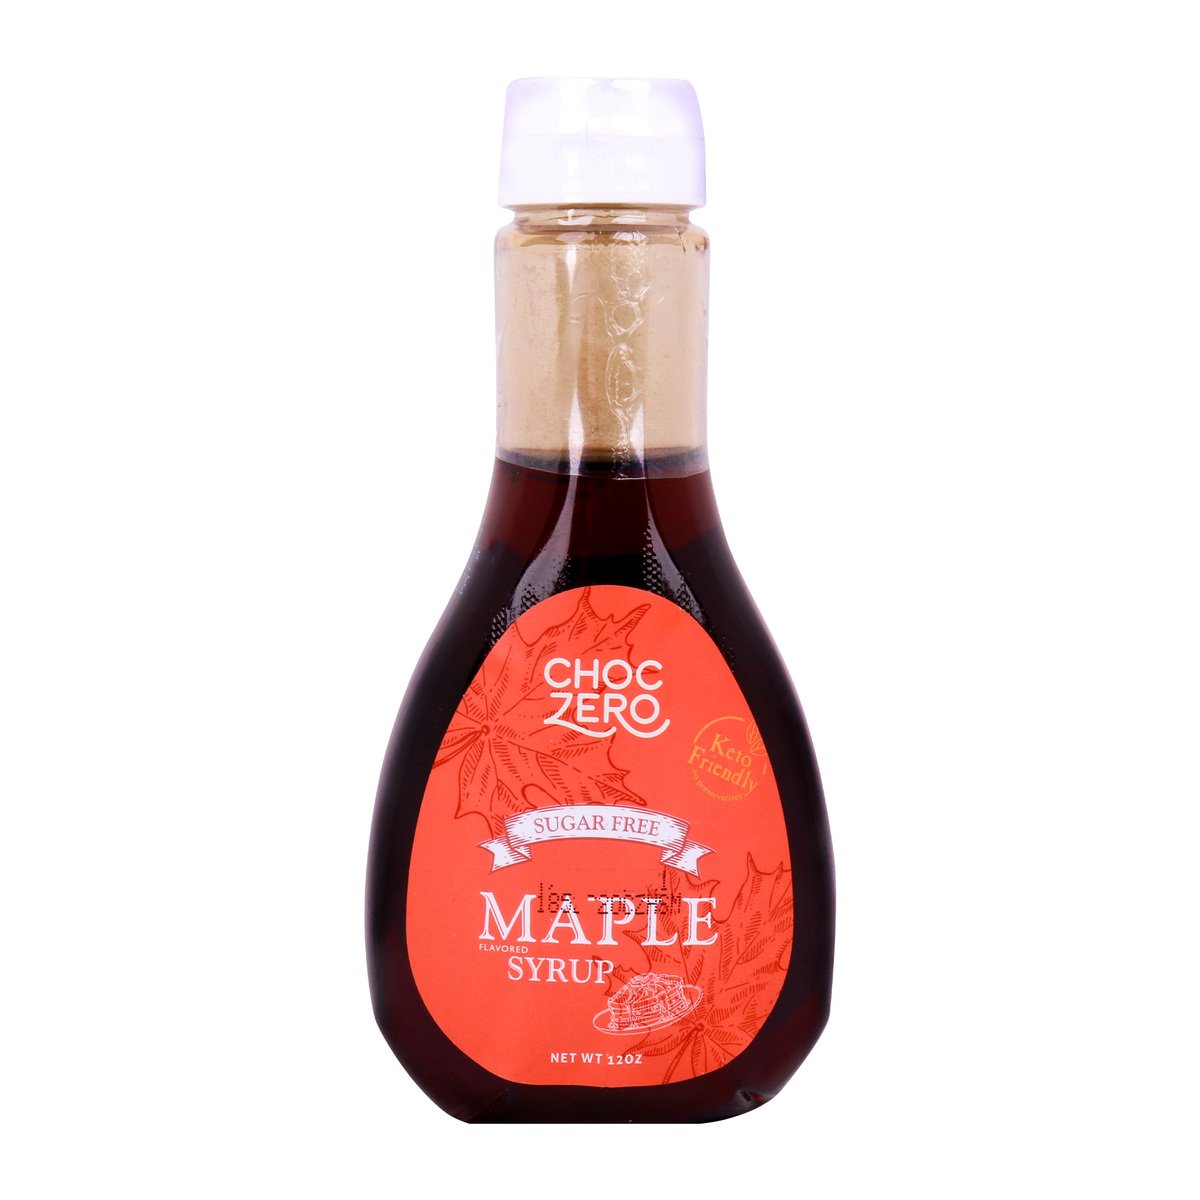 Choc Zero Maple Syrup Sugar Free 340g